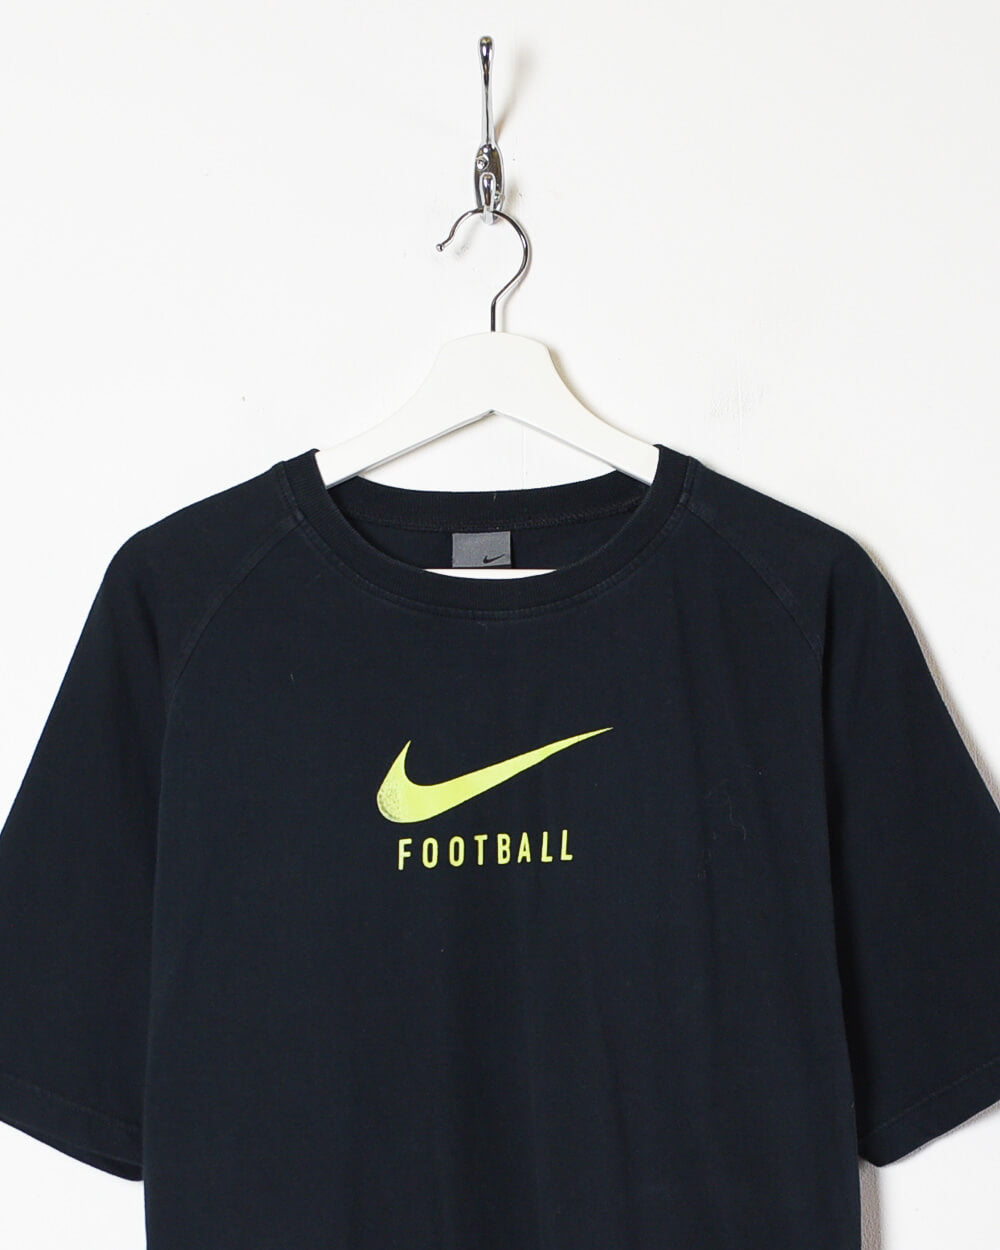 Navy Nike Football T-Shirt - Medium